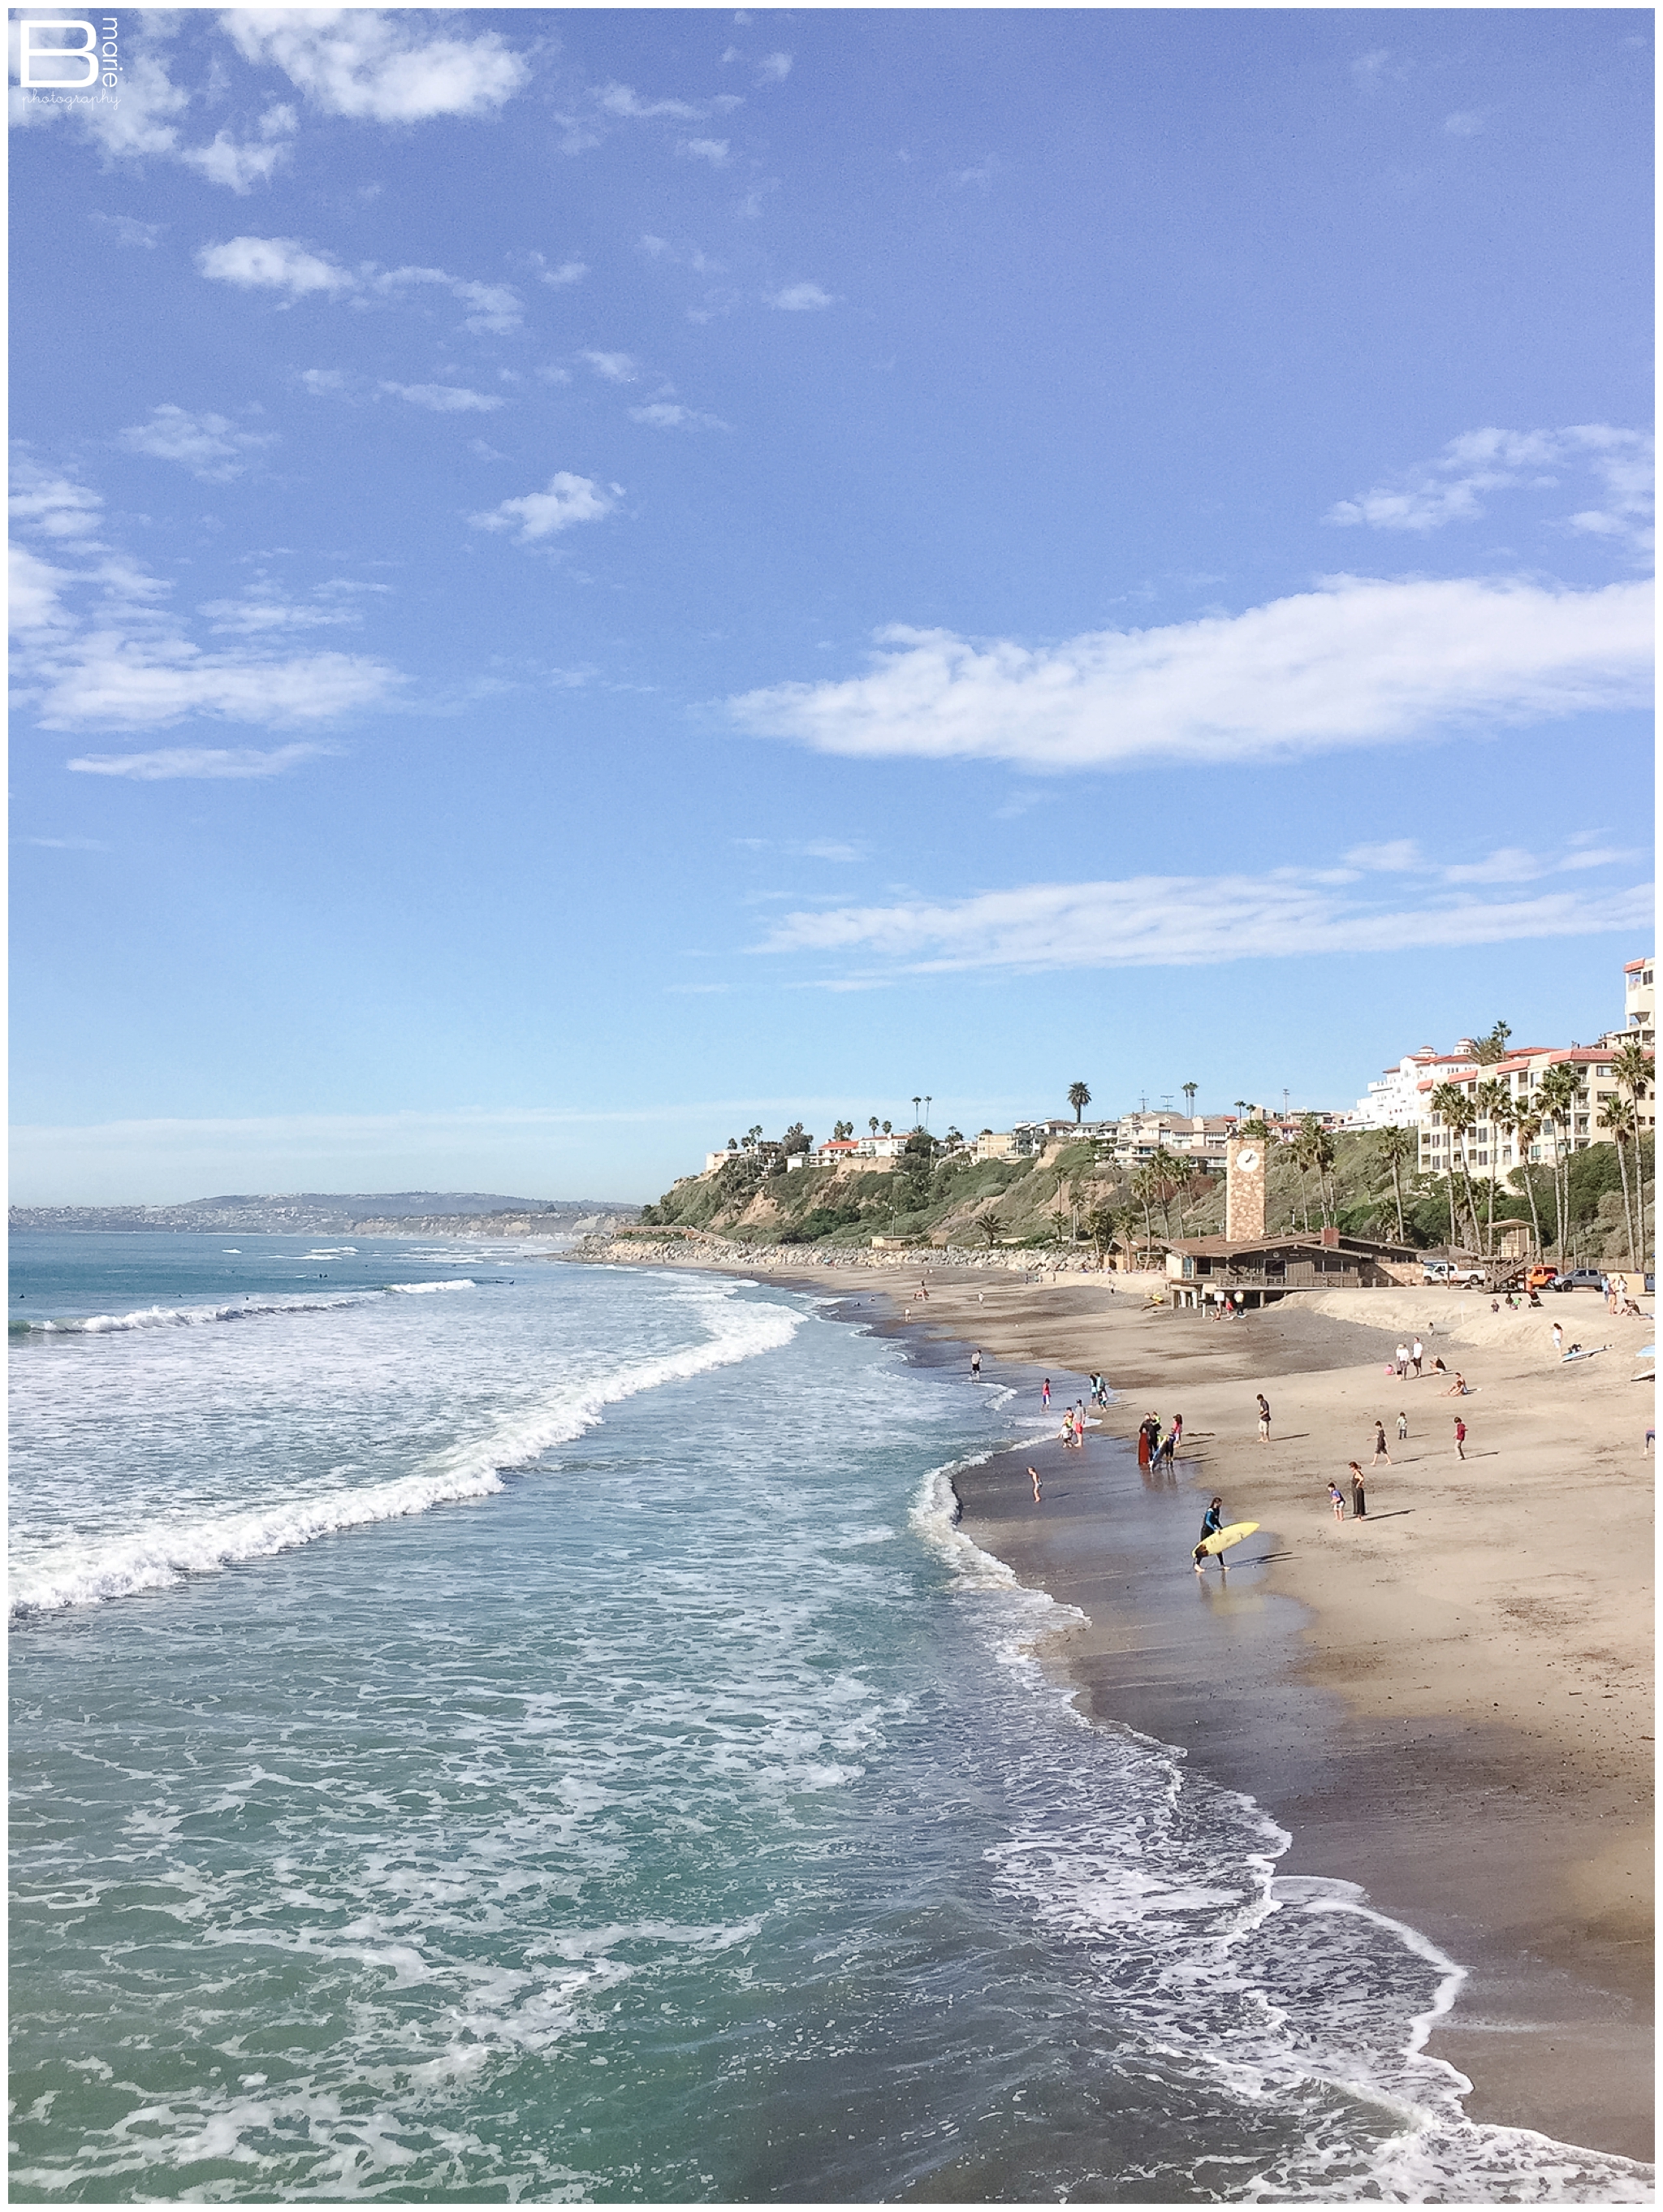 Kingwood family & brand photographer image of San Clemente, CA beach